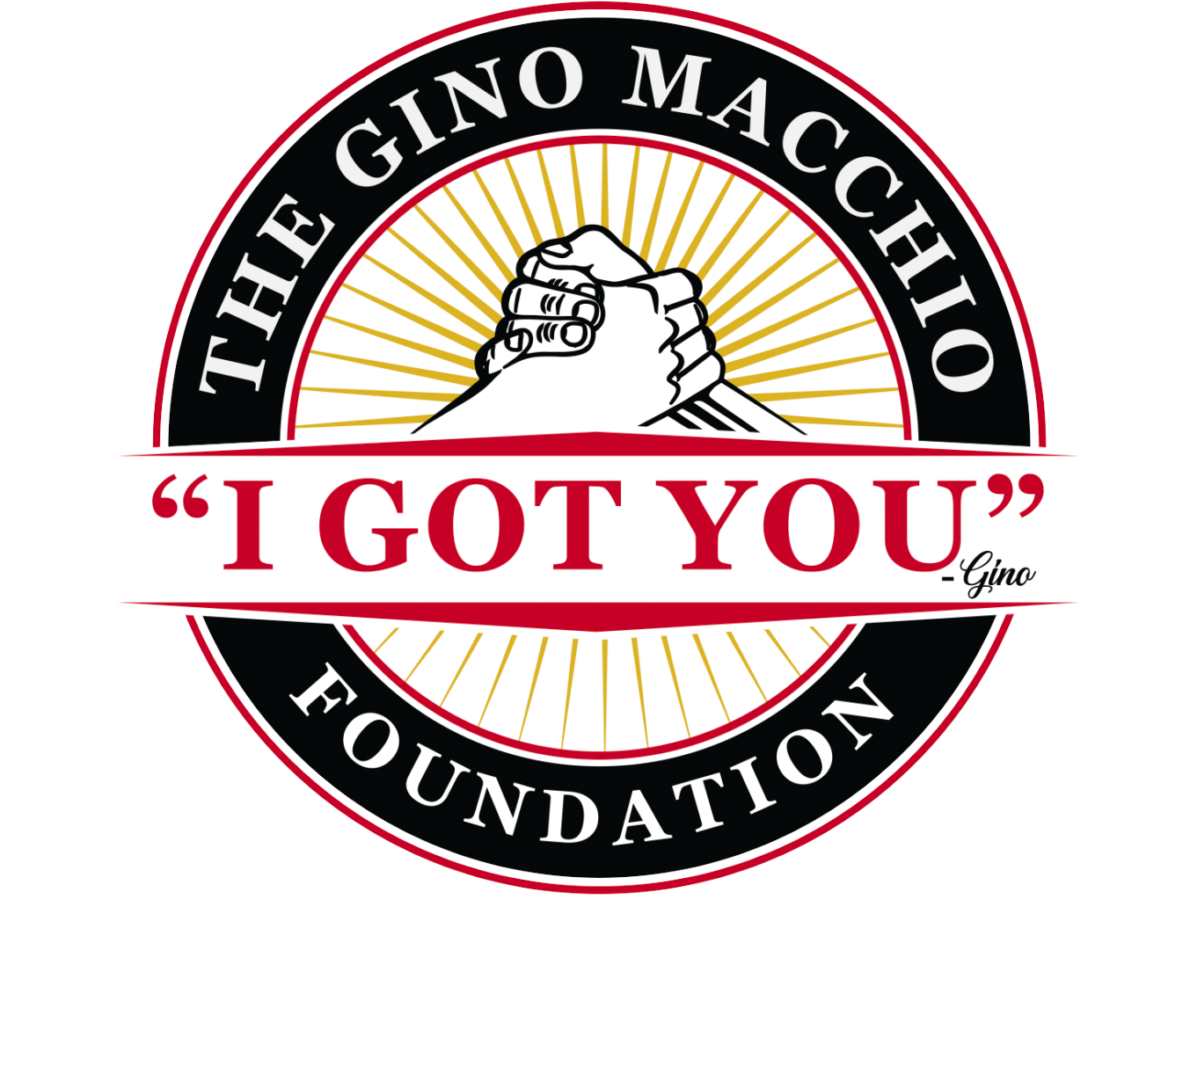 Gino Macchio Foundation